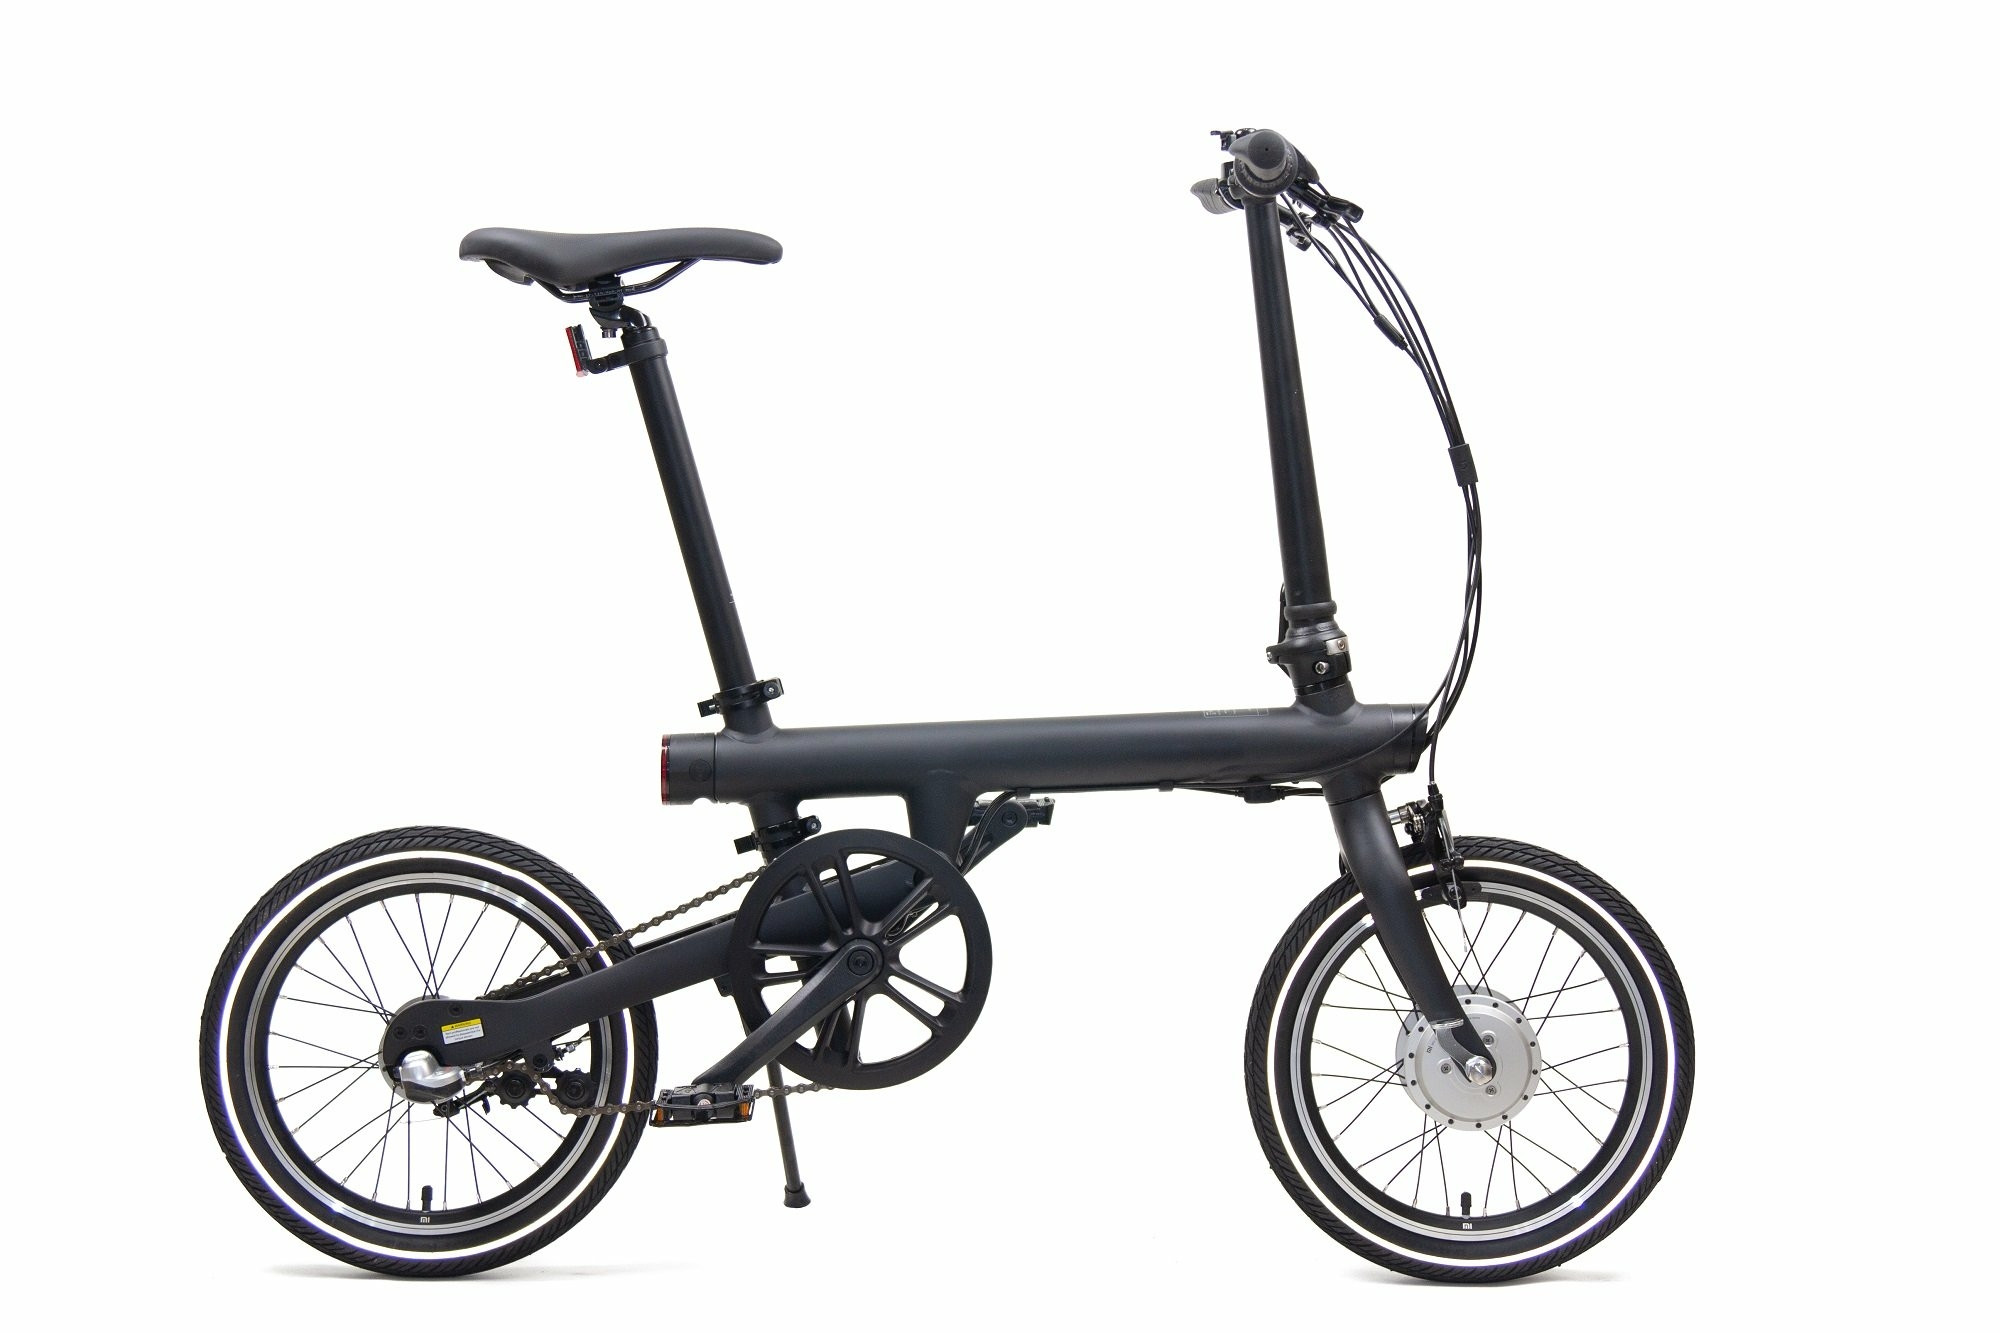 Mi Smart Electric Folding Bike